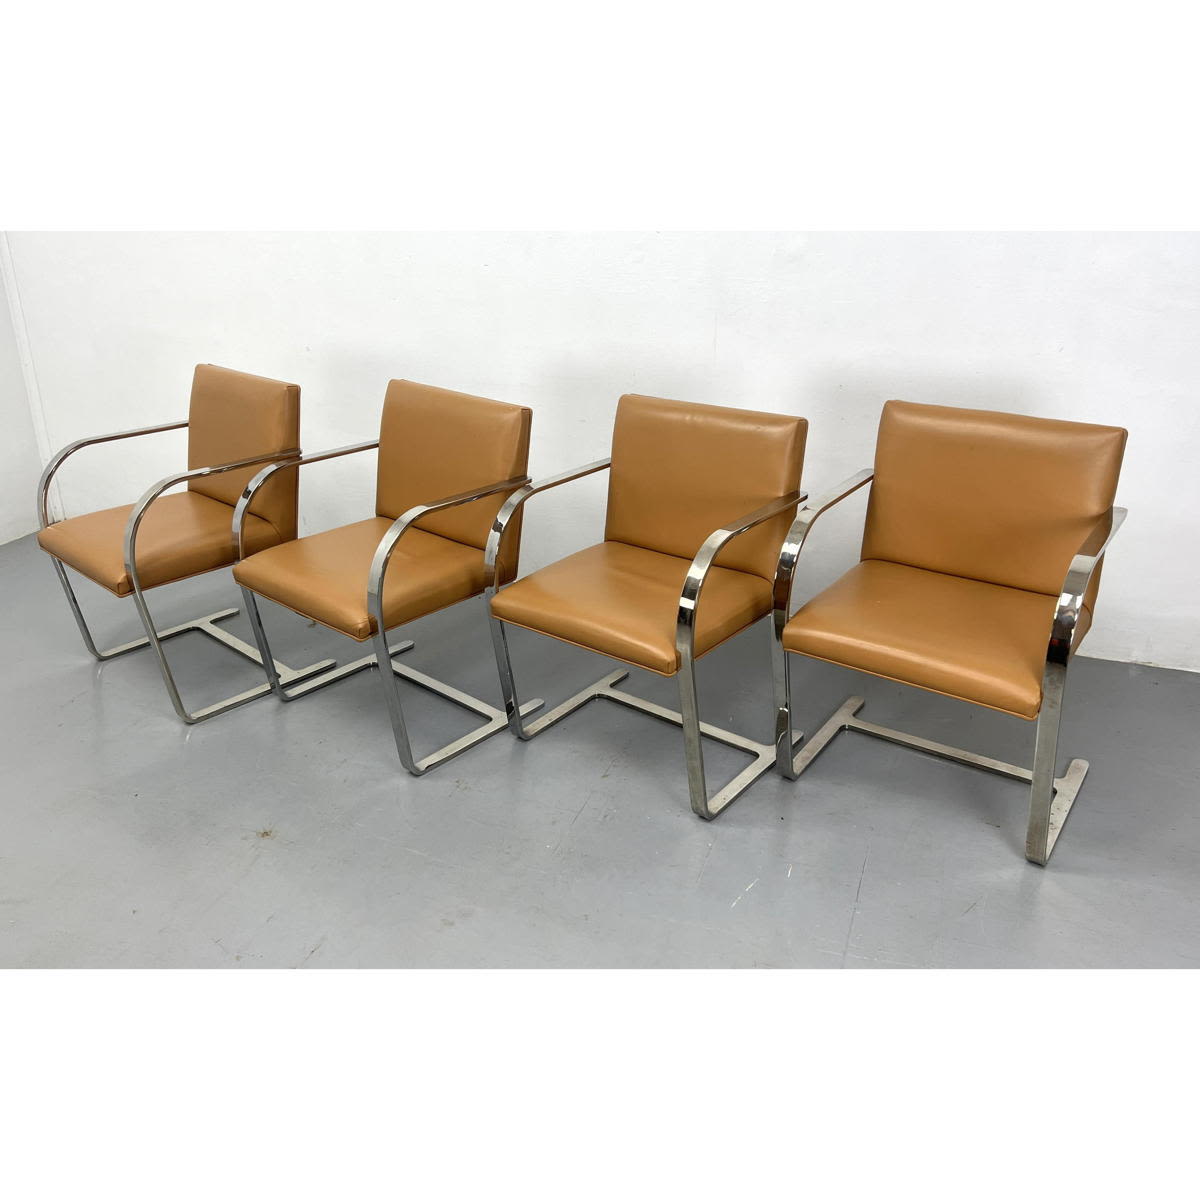 Set 4 BRNO style chrome arm chairs